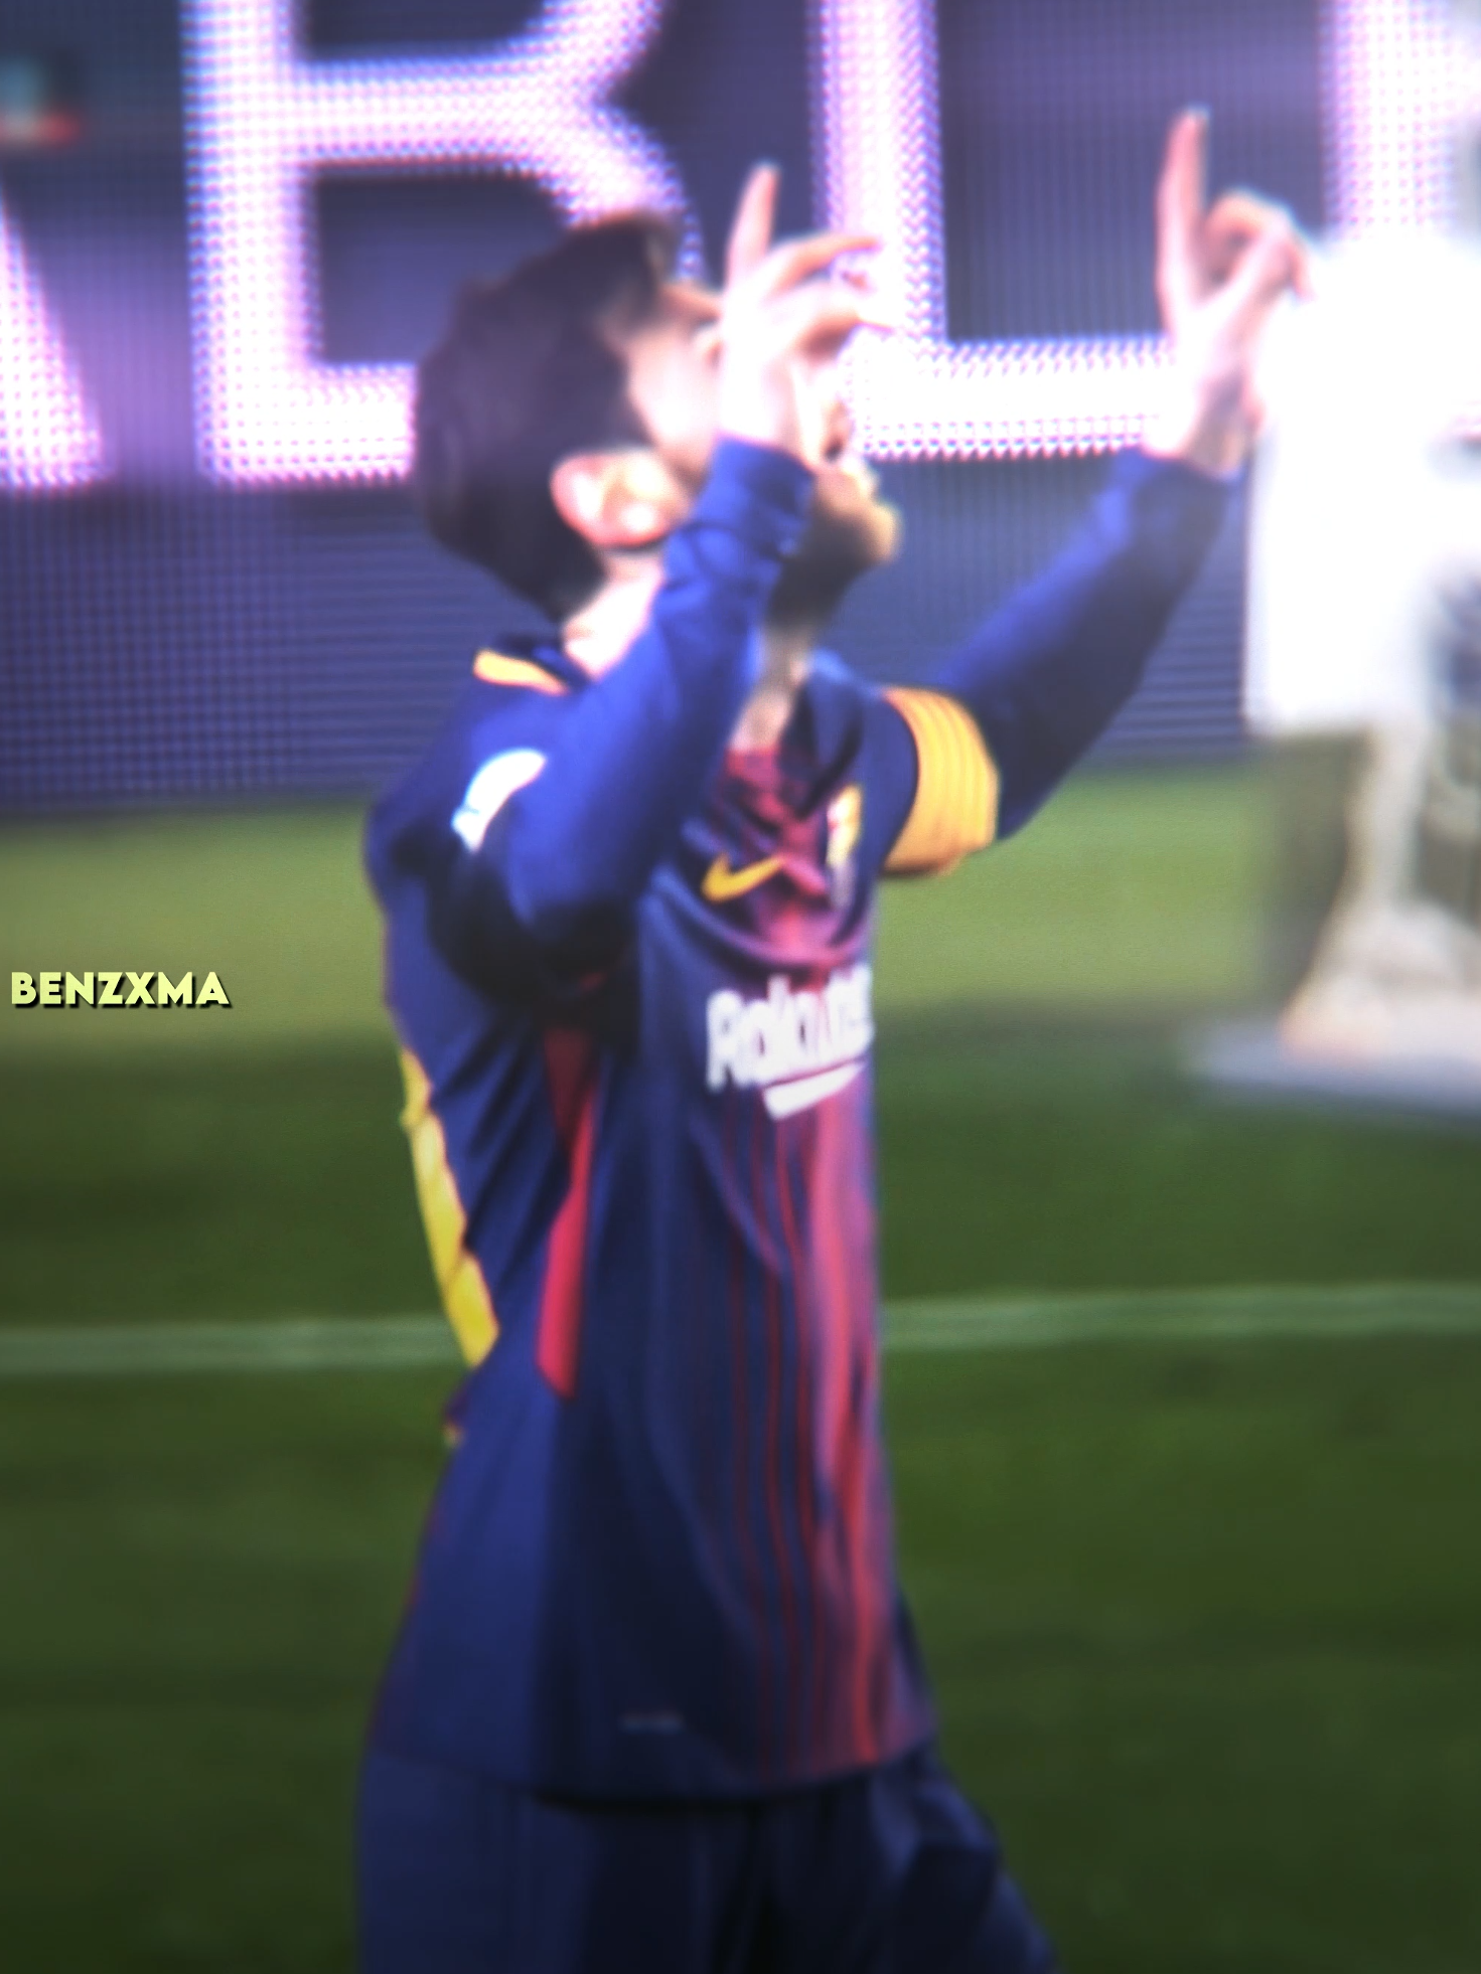 Messi Second Chance 🤯🔥 #benzemaftbl #lionelmessi #messi #barcelona #football #edit